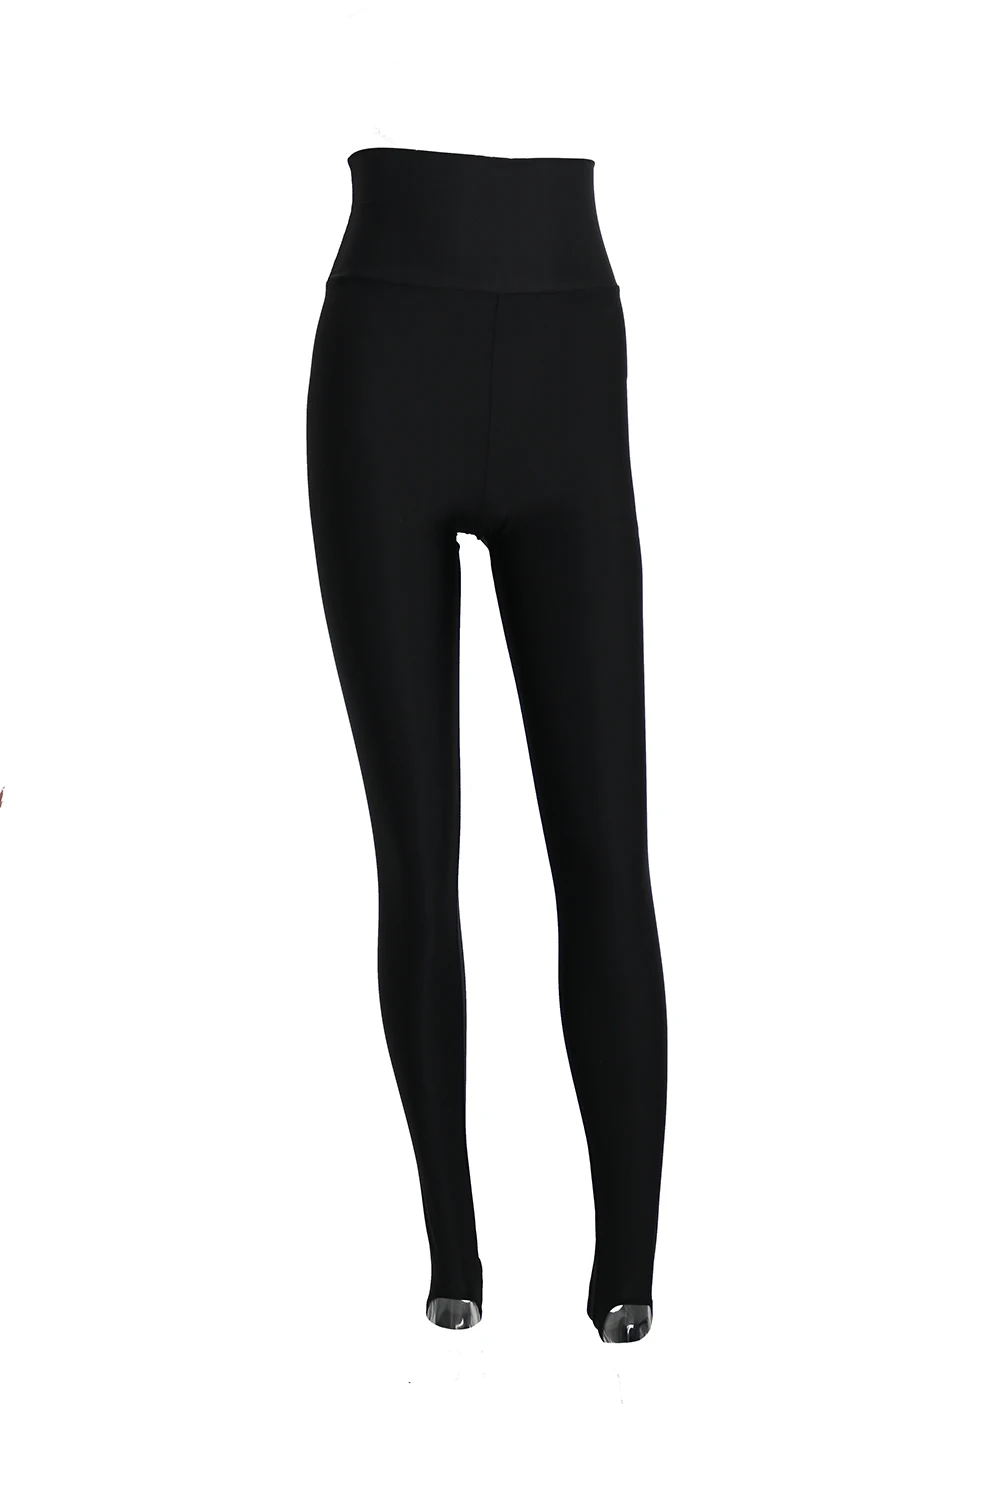 fleece lined leggings SPEERISE Women's Solid Black Fitness Skinny Stirrup High Waist Legging Dance Spandex Pants for Women Gym Stretch Trousers zyia leggings